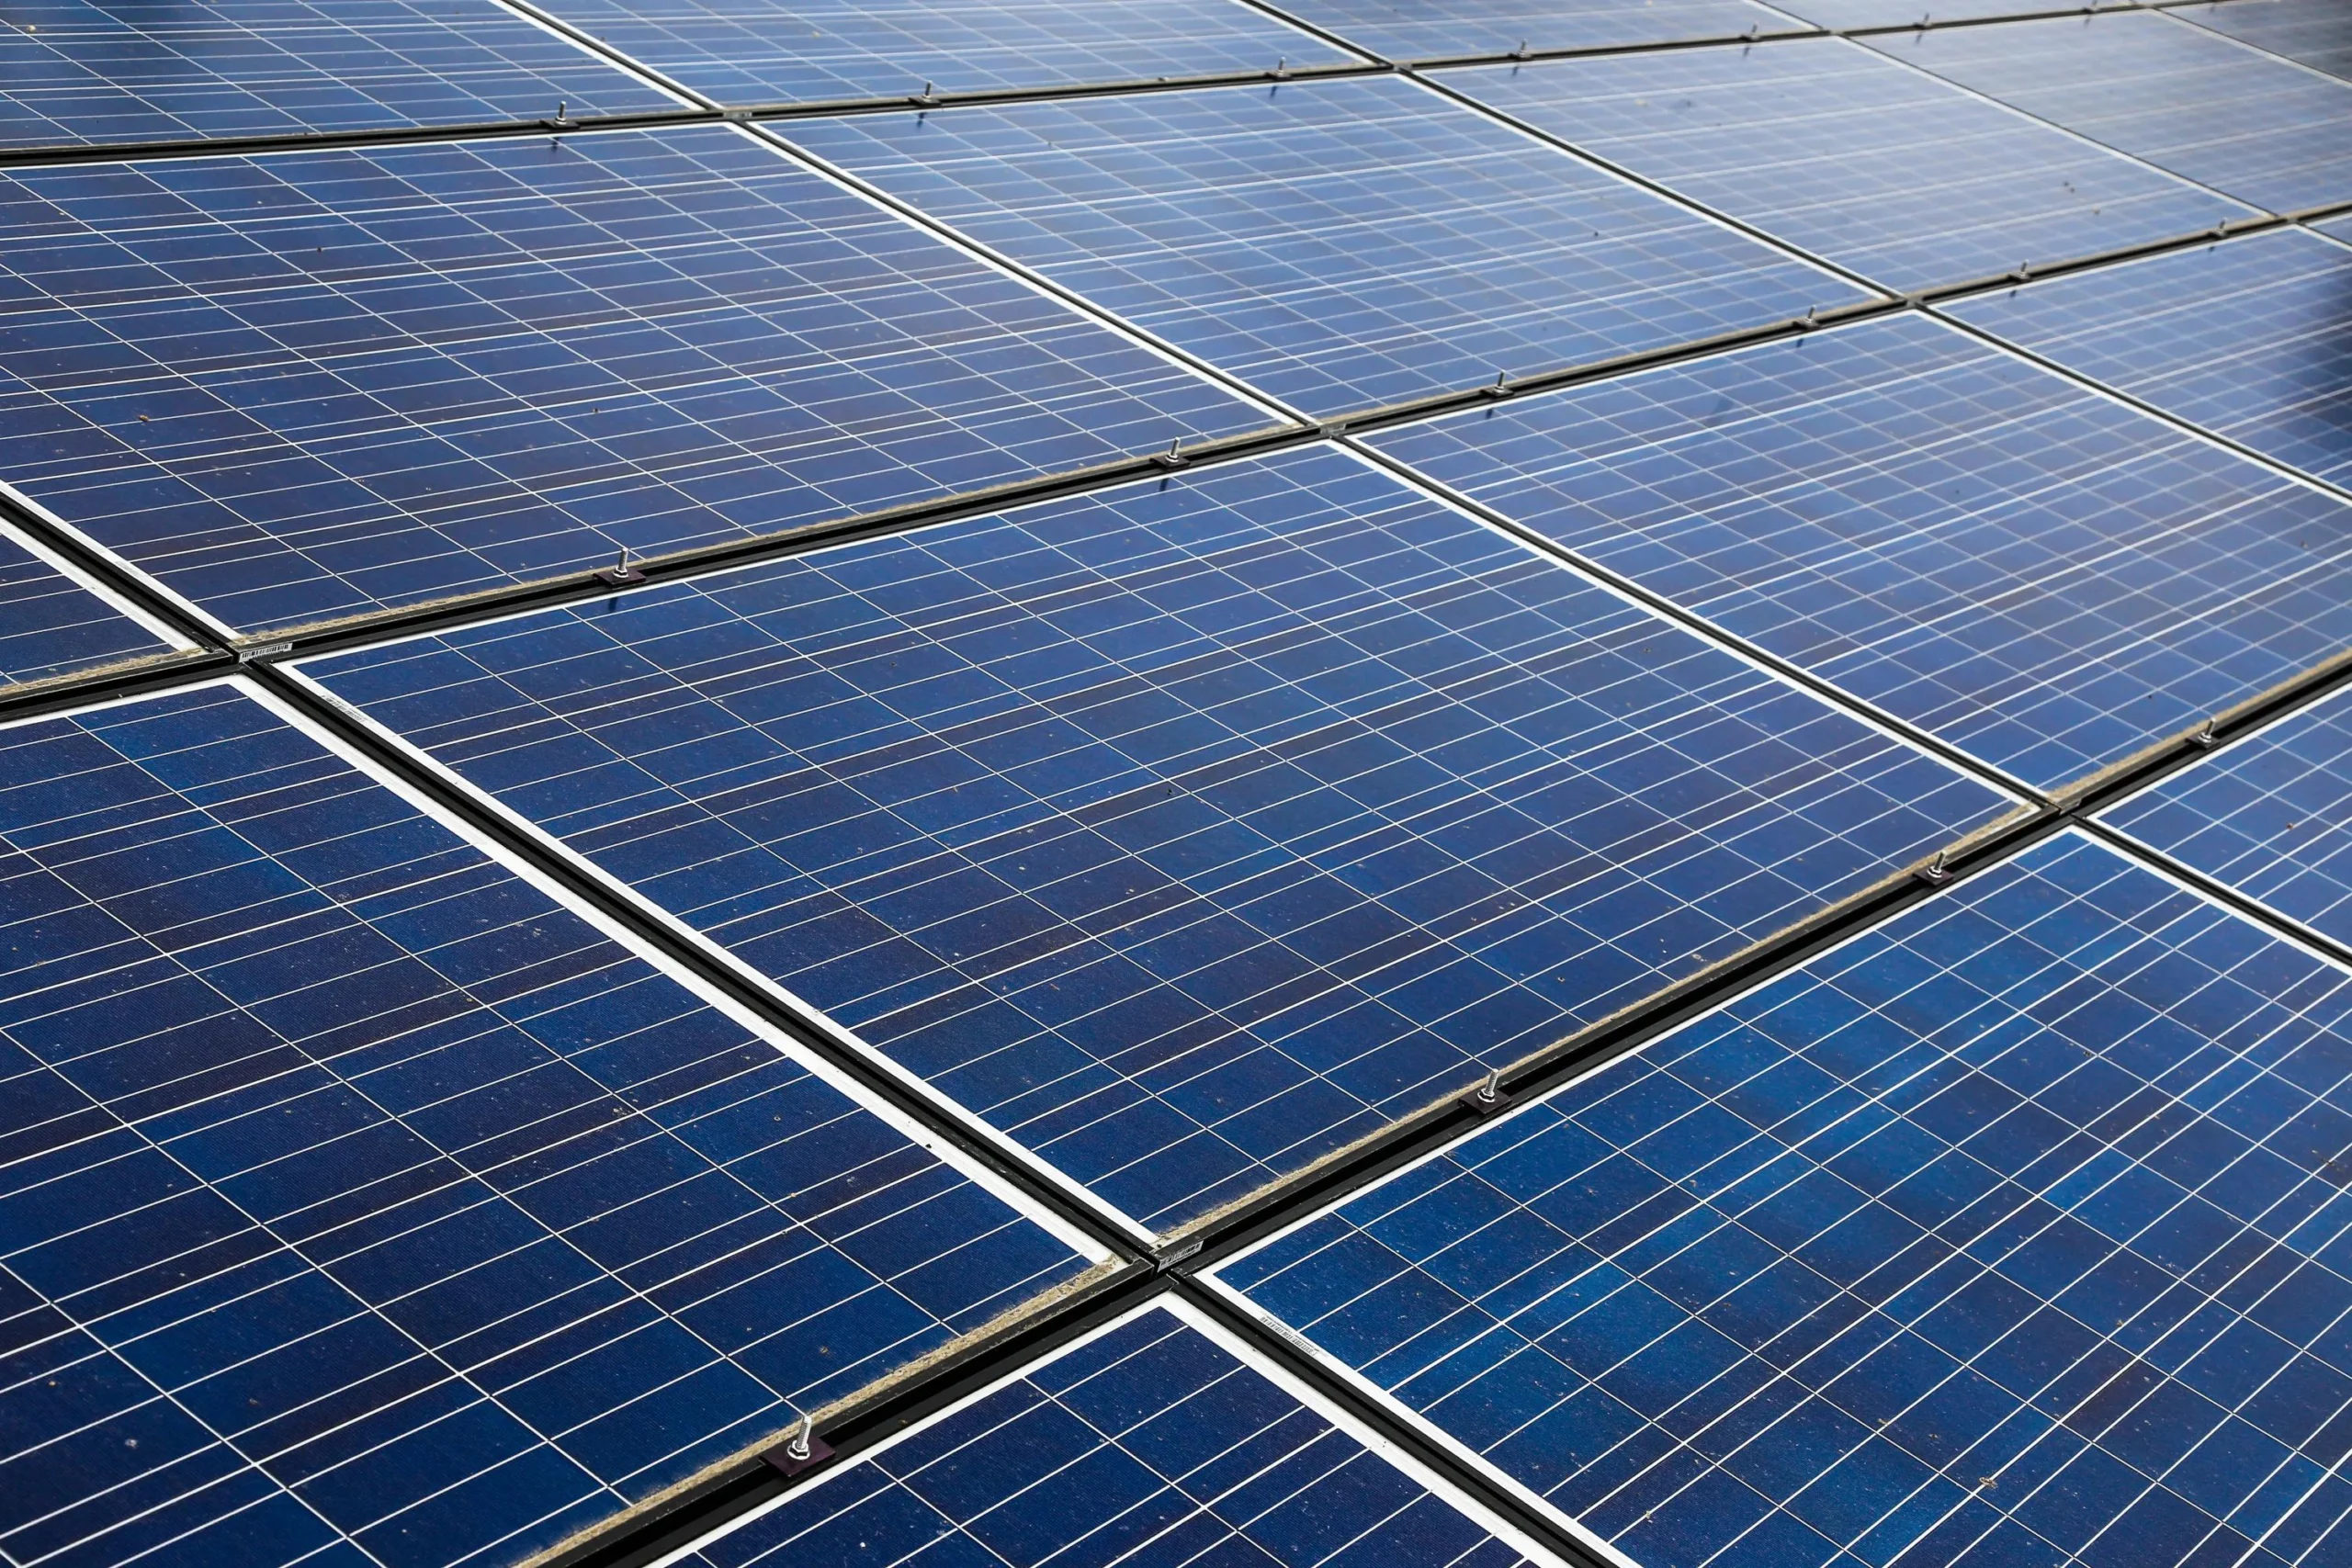 perovskite solar panels - What are the drawbacks of perovskite solar cells